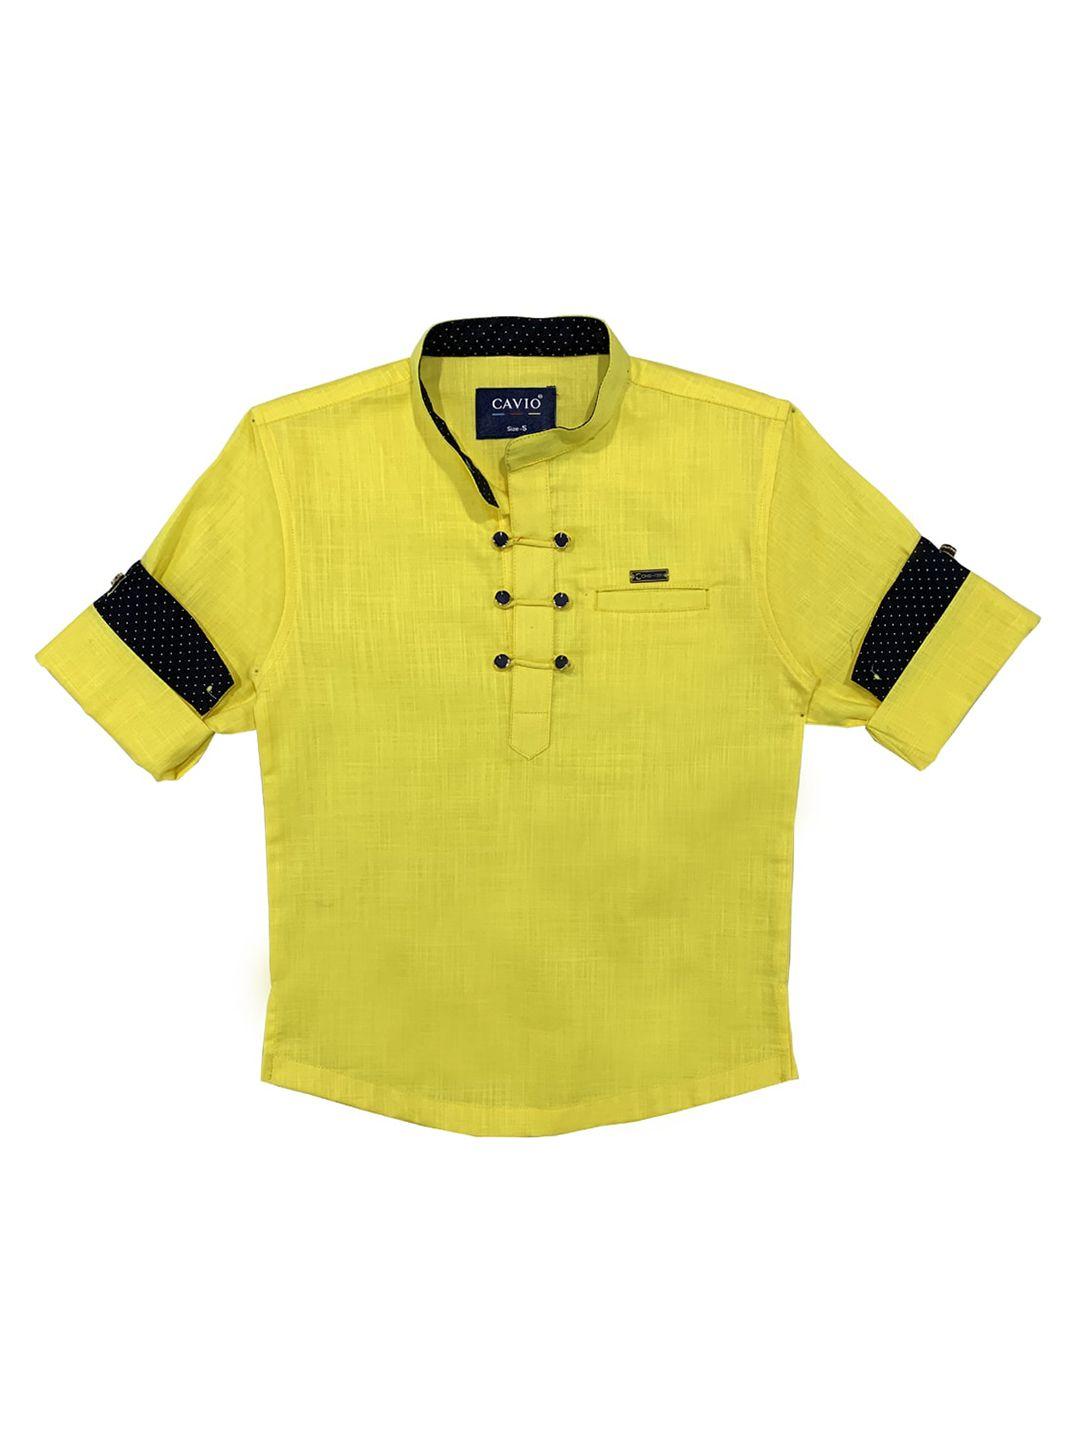 cavio boys yellow casual shirt